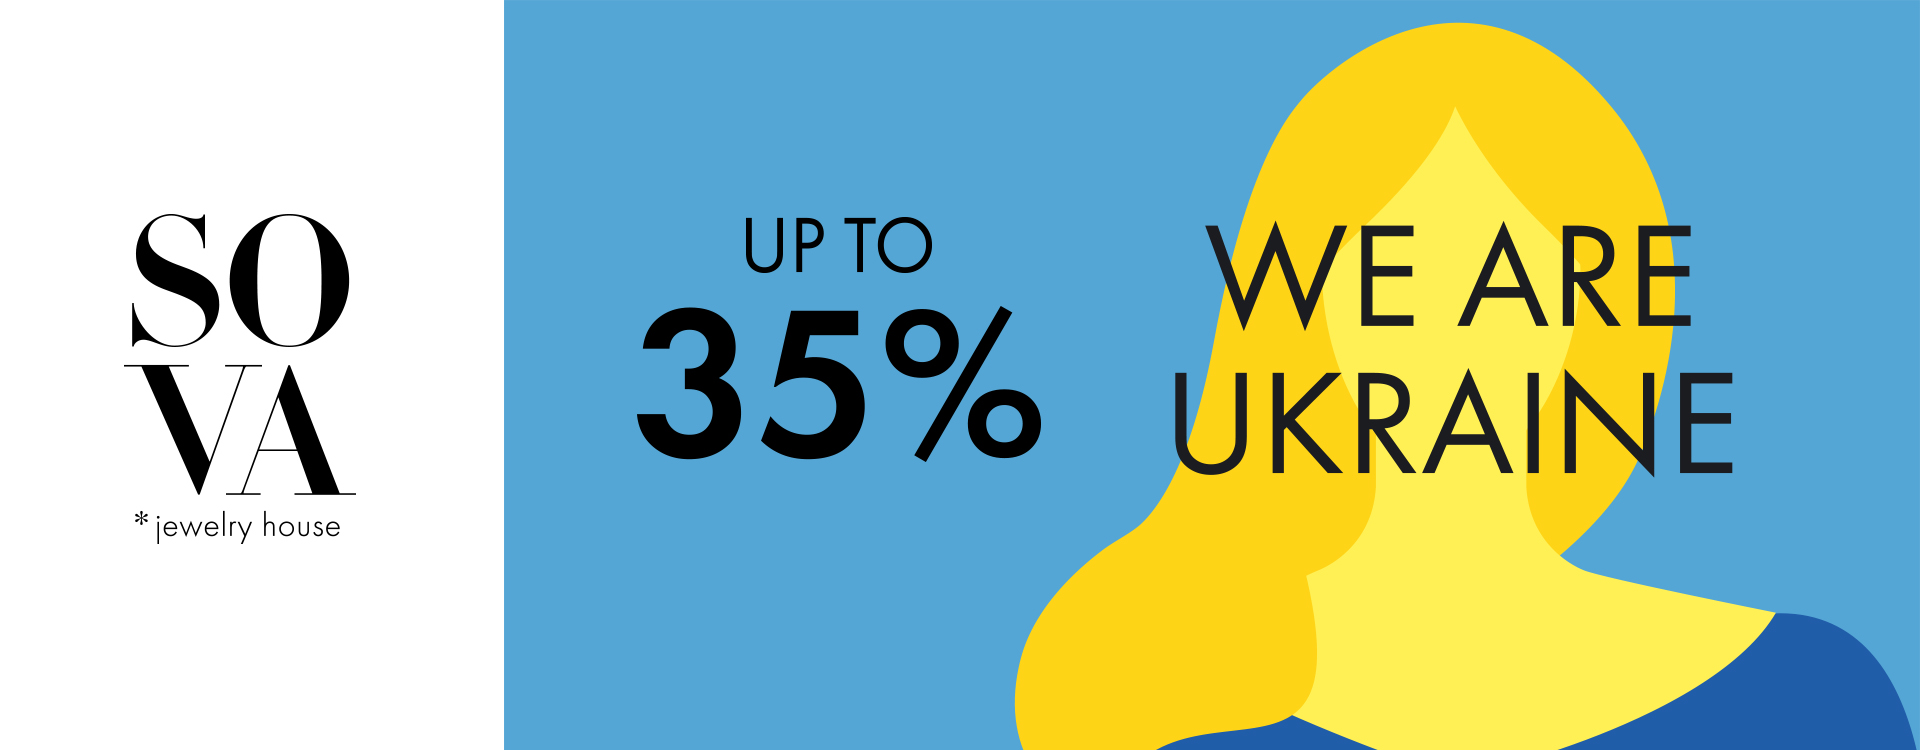 WE ARE UKRAINE Discount up to 35%